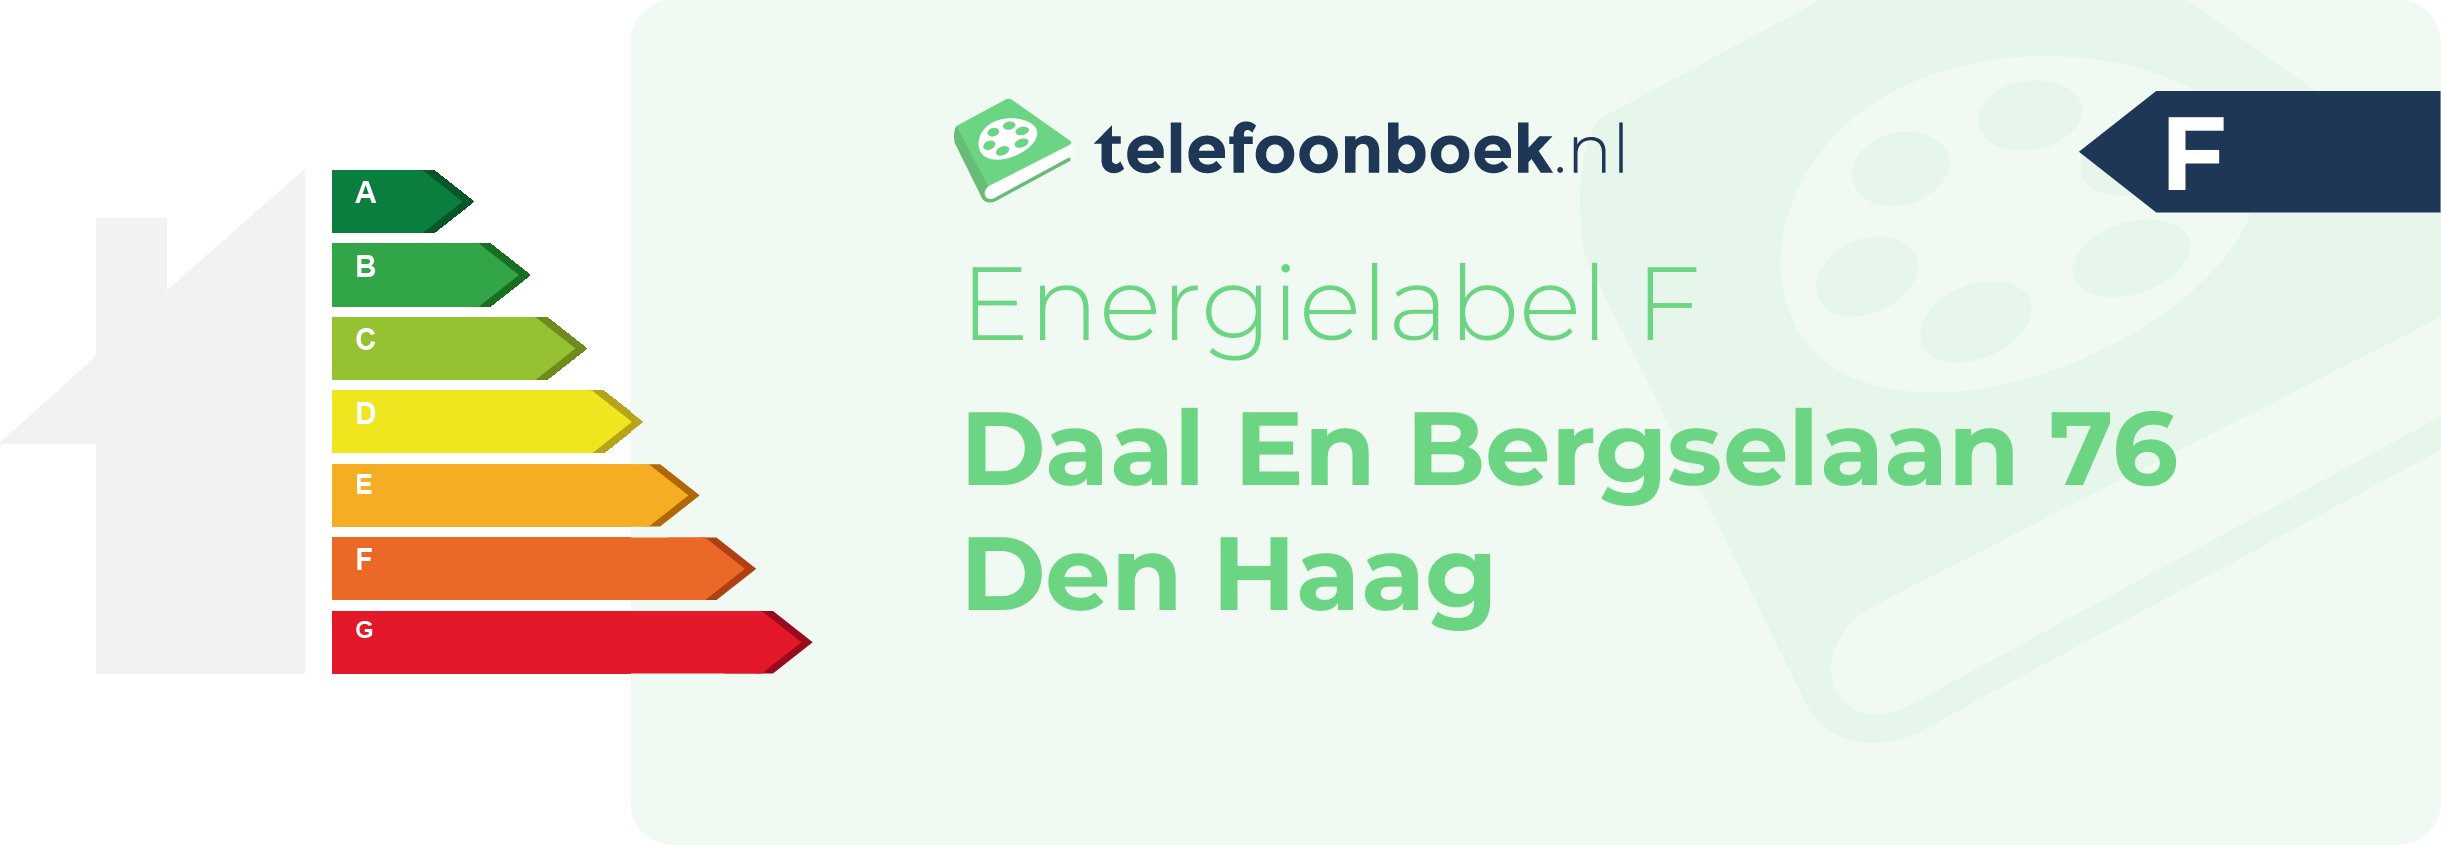 Energielabel Daal En Bergselaan 76 Den Haag